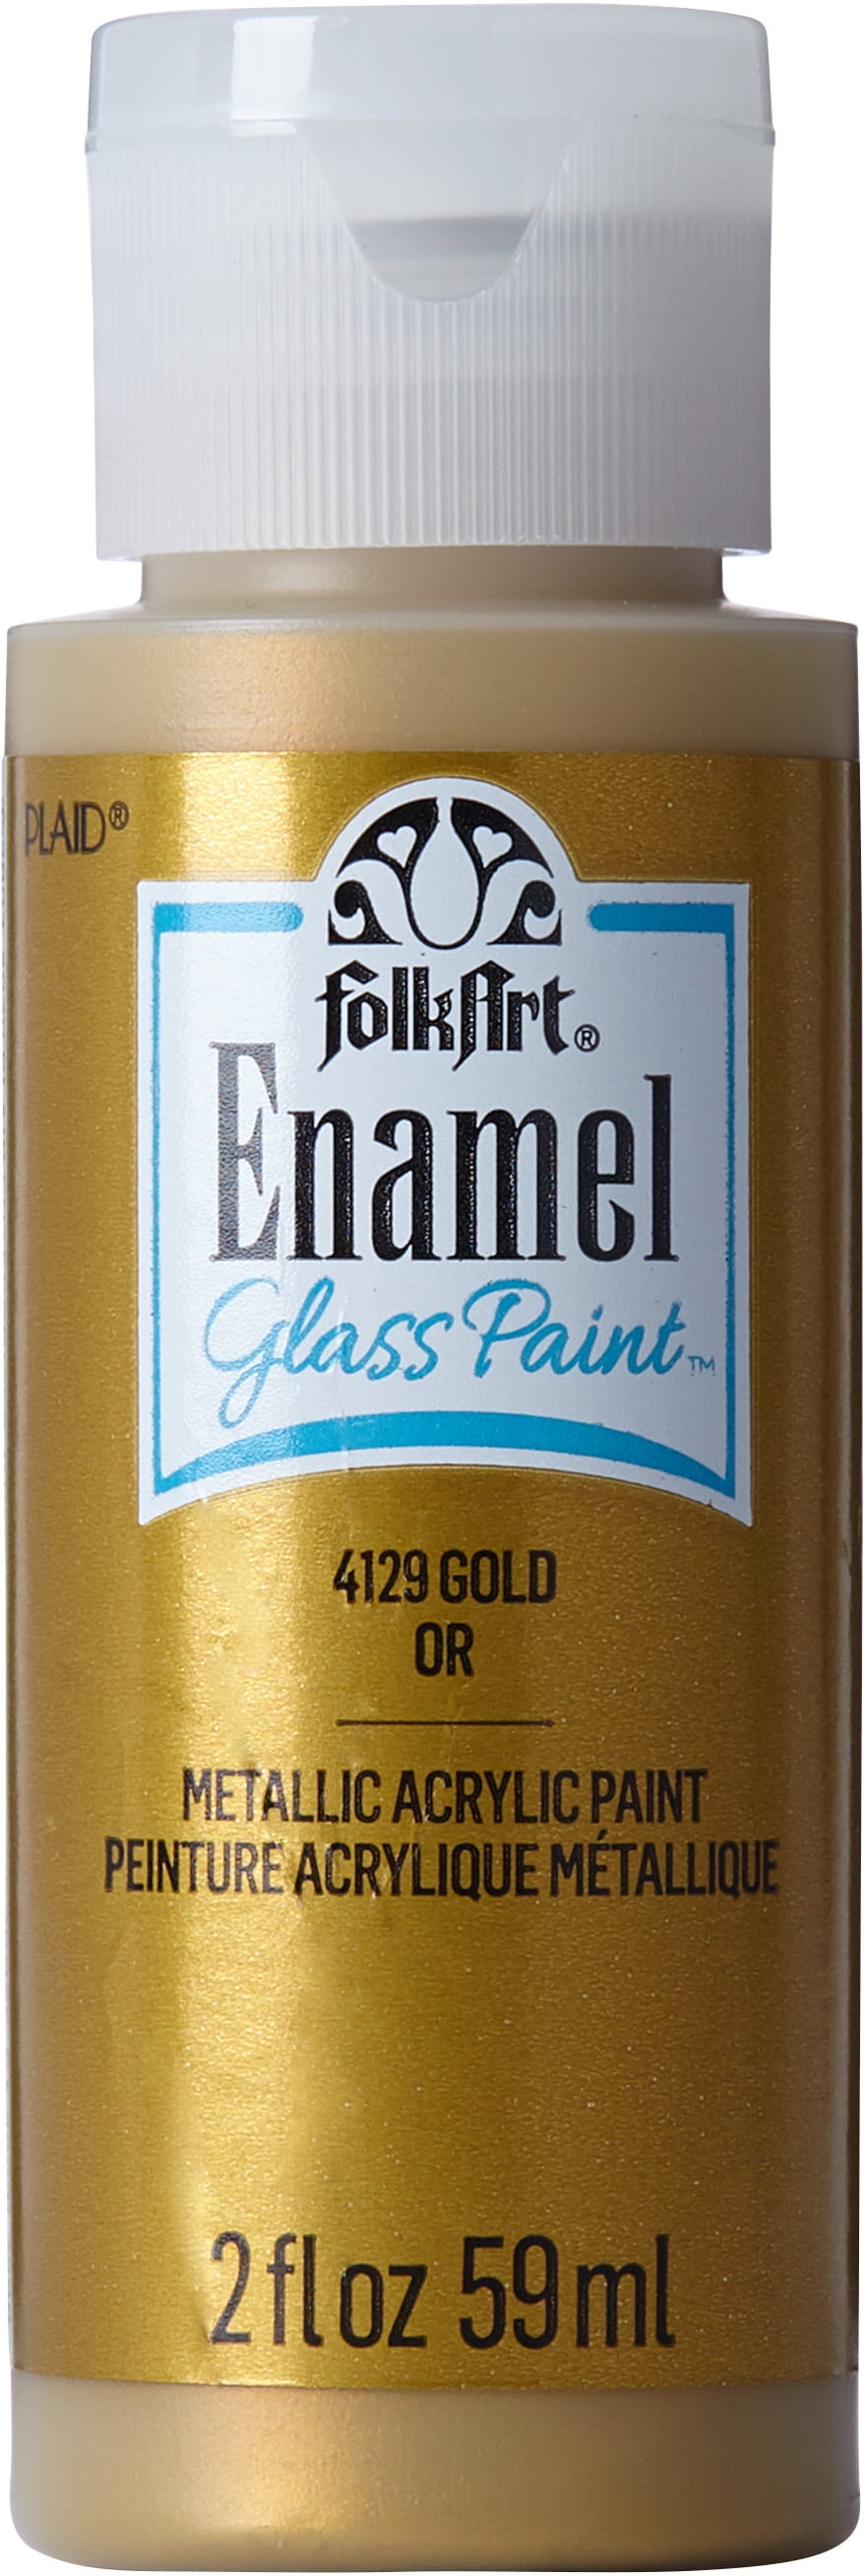 2 oz. Glorious Gold Gloss Enamel Paint